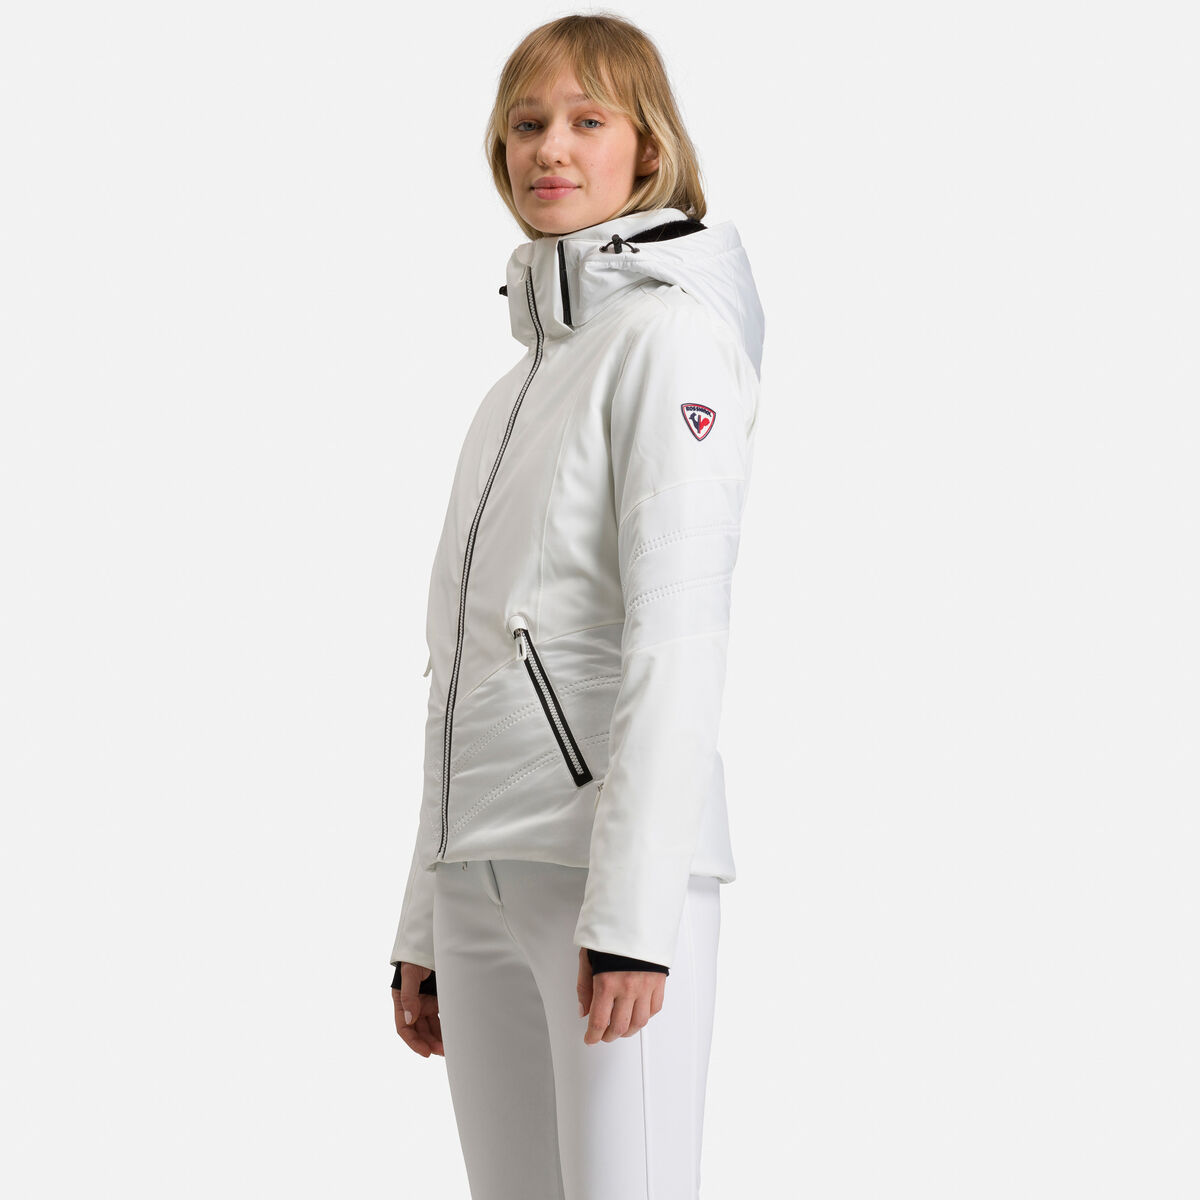 Women's Four-Way Stretch Ski Jacket | OUTLET | Rossignol